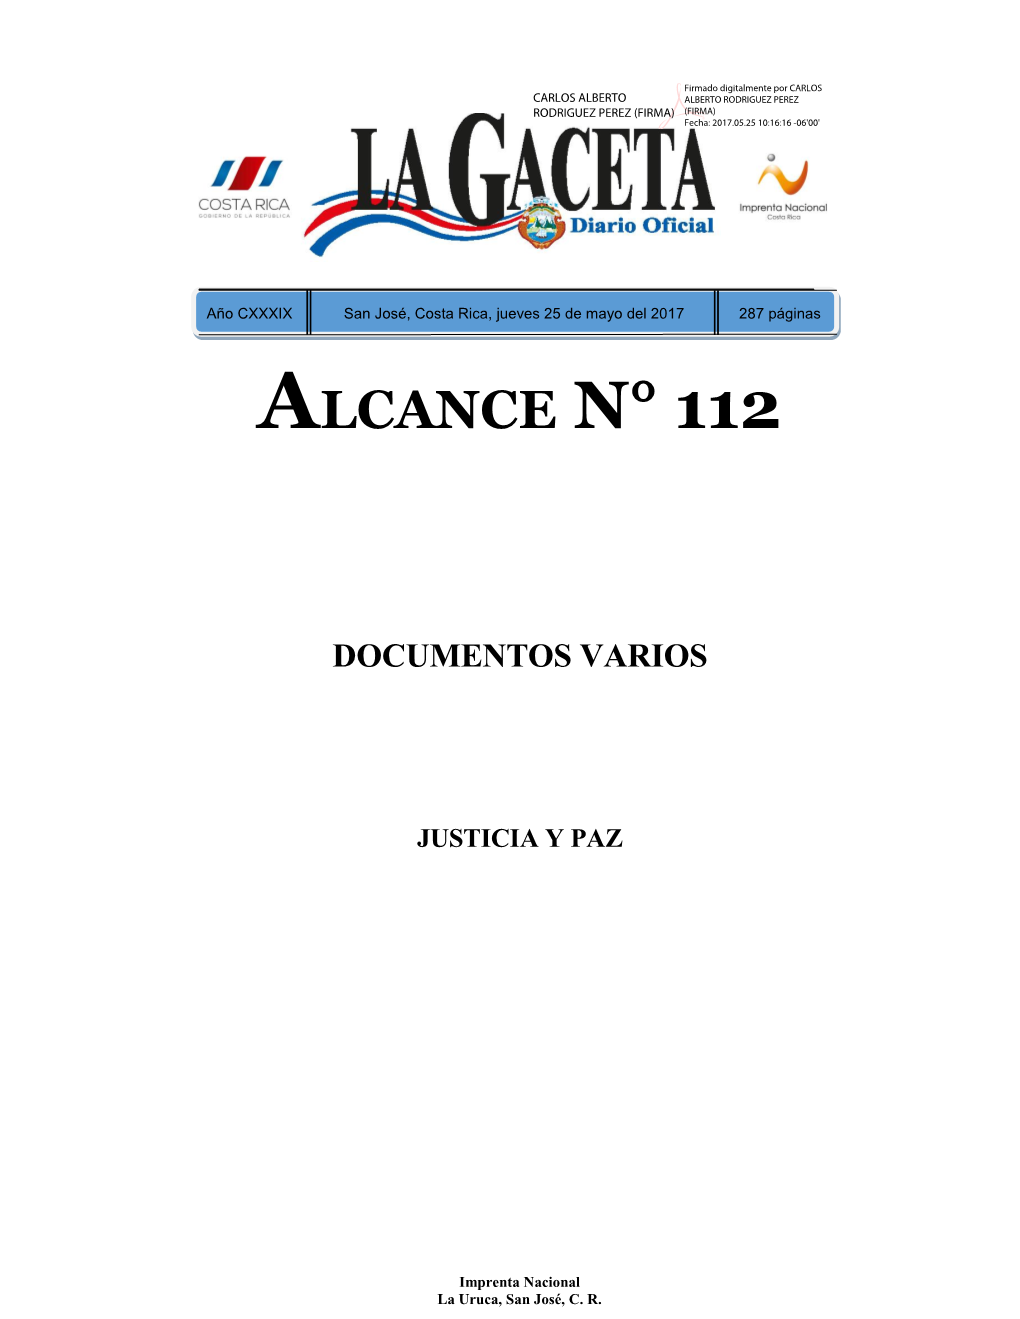 ALCANCE DIGITAL N° 112 a La Gaceta N° 98 De La Fecha 25 05 2017